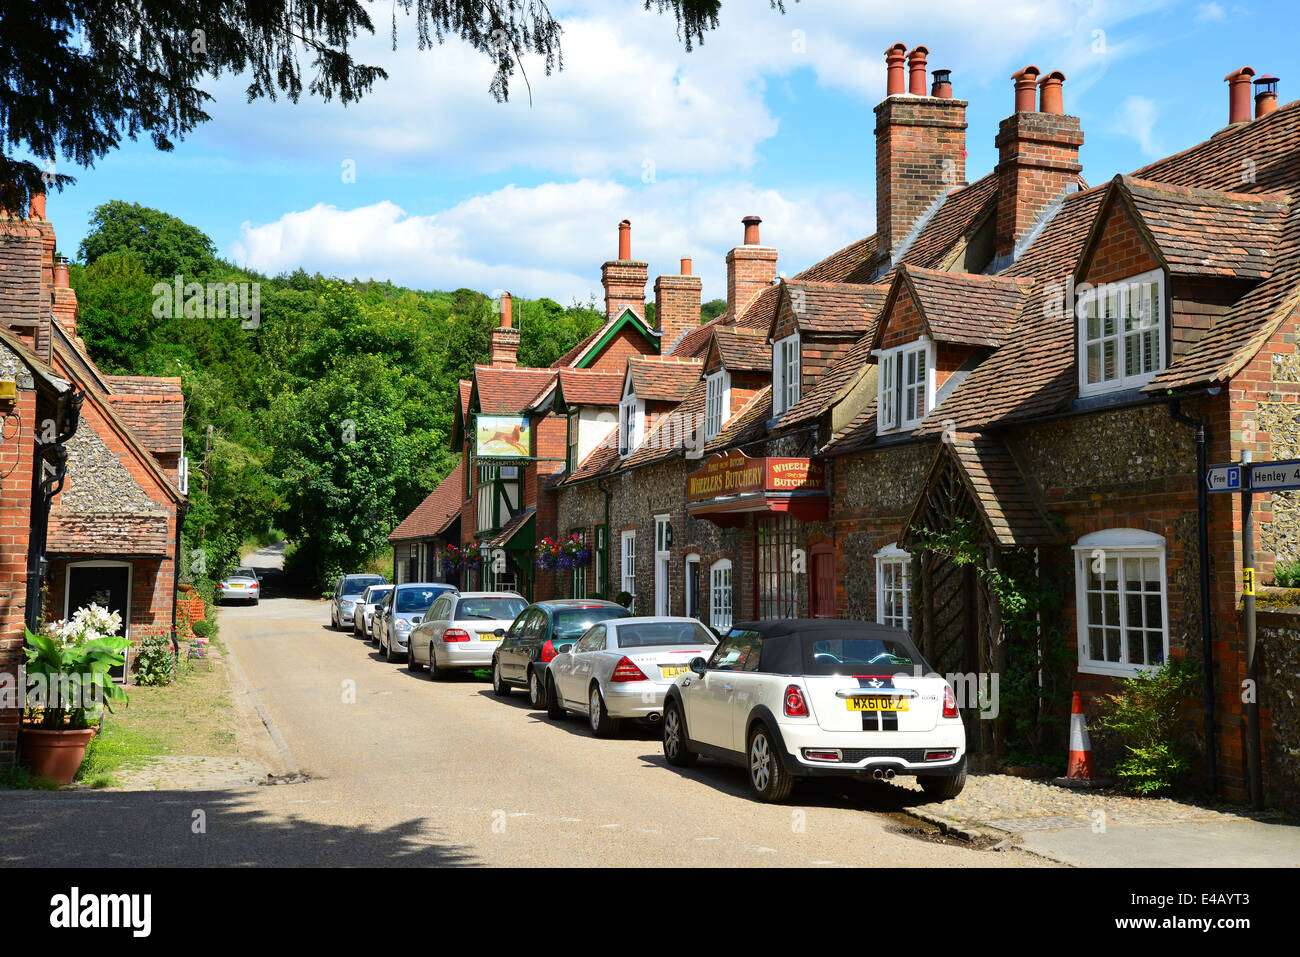 Flint cottages and Stag & Huntsman pub, Hambleden, Buckinghamshire, England, United Kingdom Stock Photo